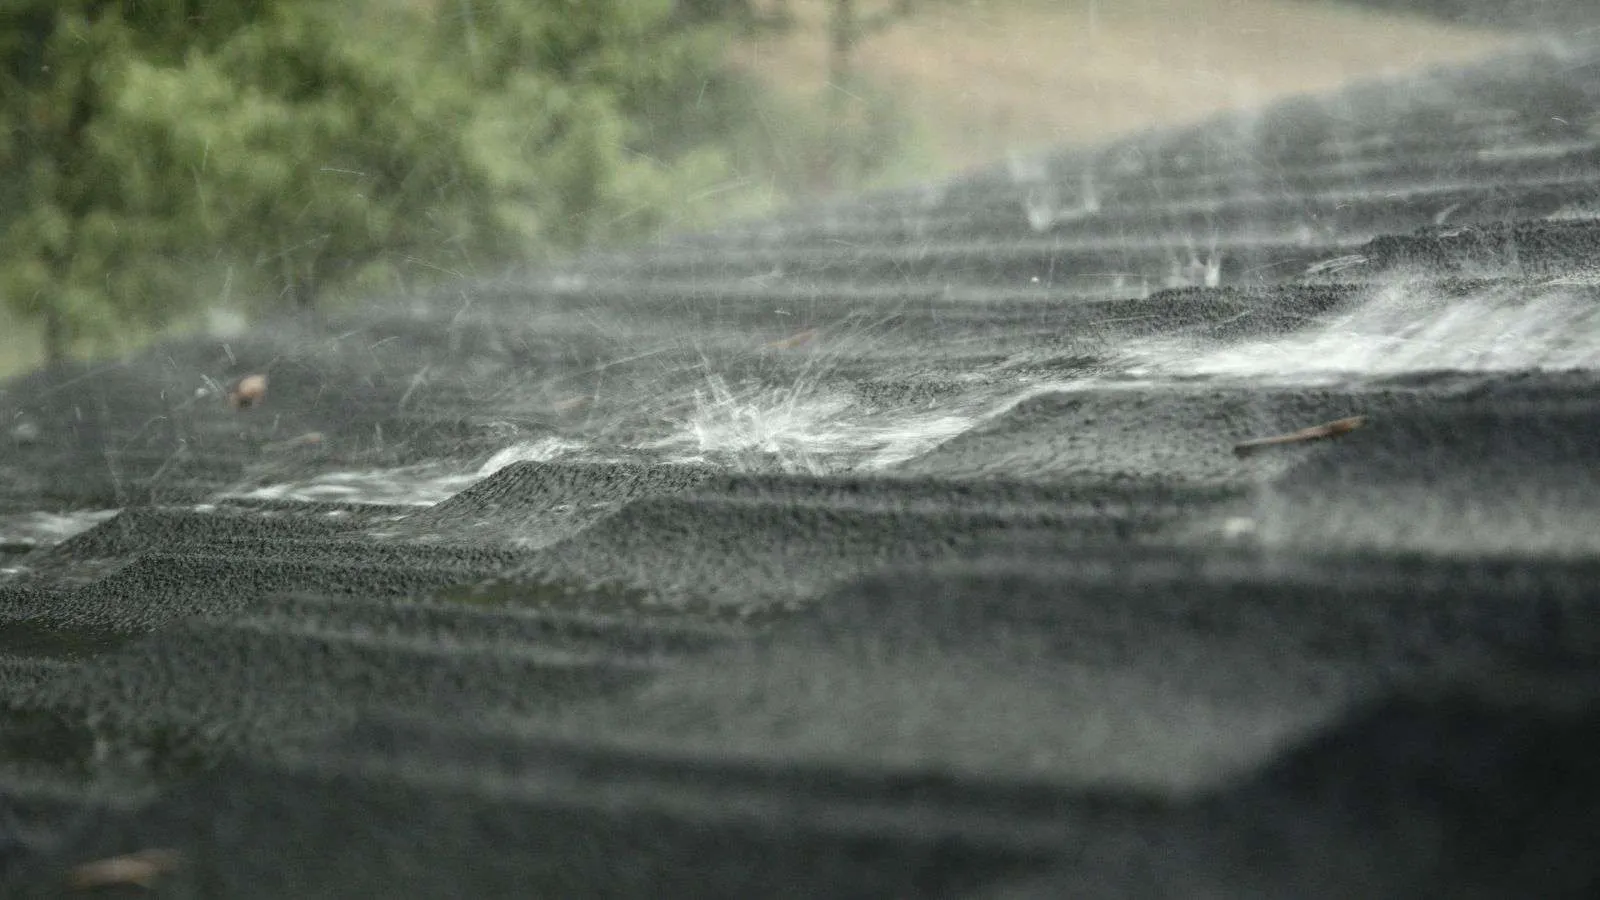 acid rain on asphalt shingles - bighomeprojects.com